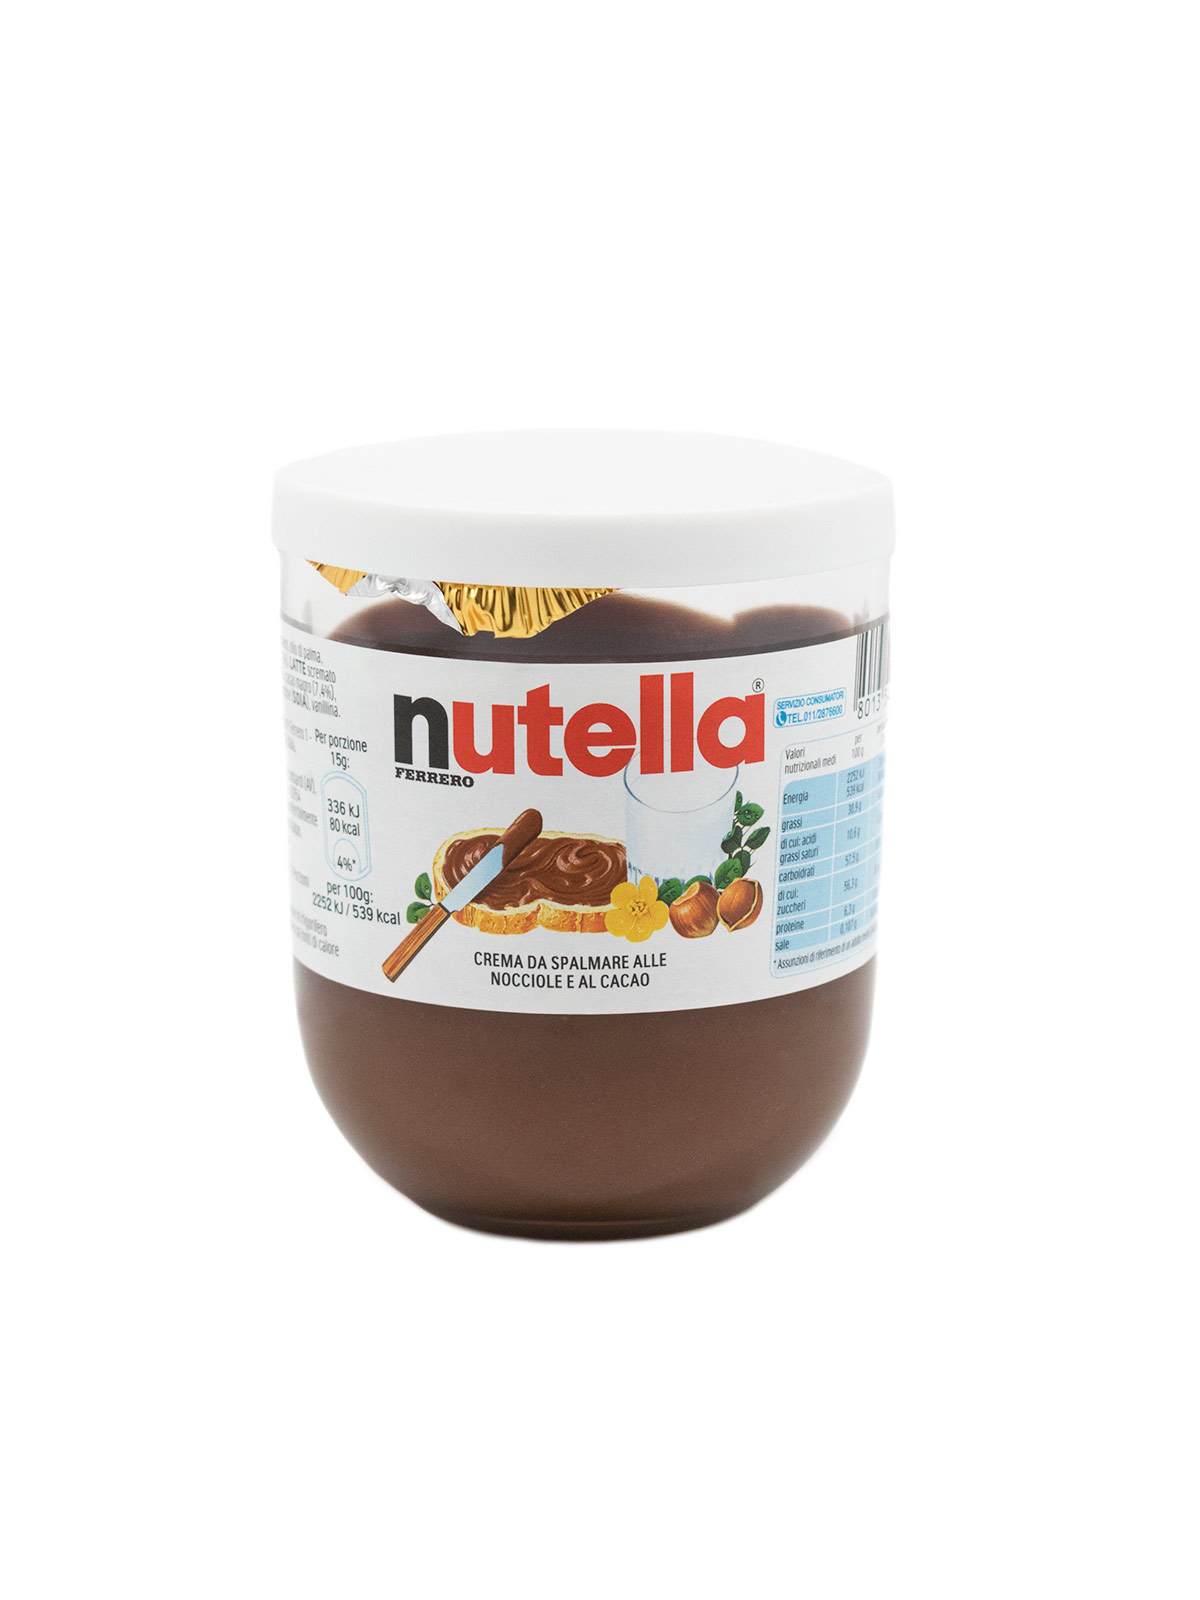 Nutella Nutella Hazelnut Spread 5kg Jar - MADE IN – Cerini Coffee & Gifts